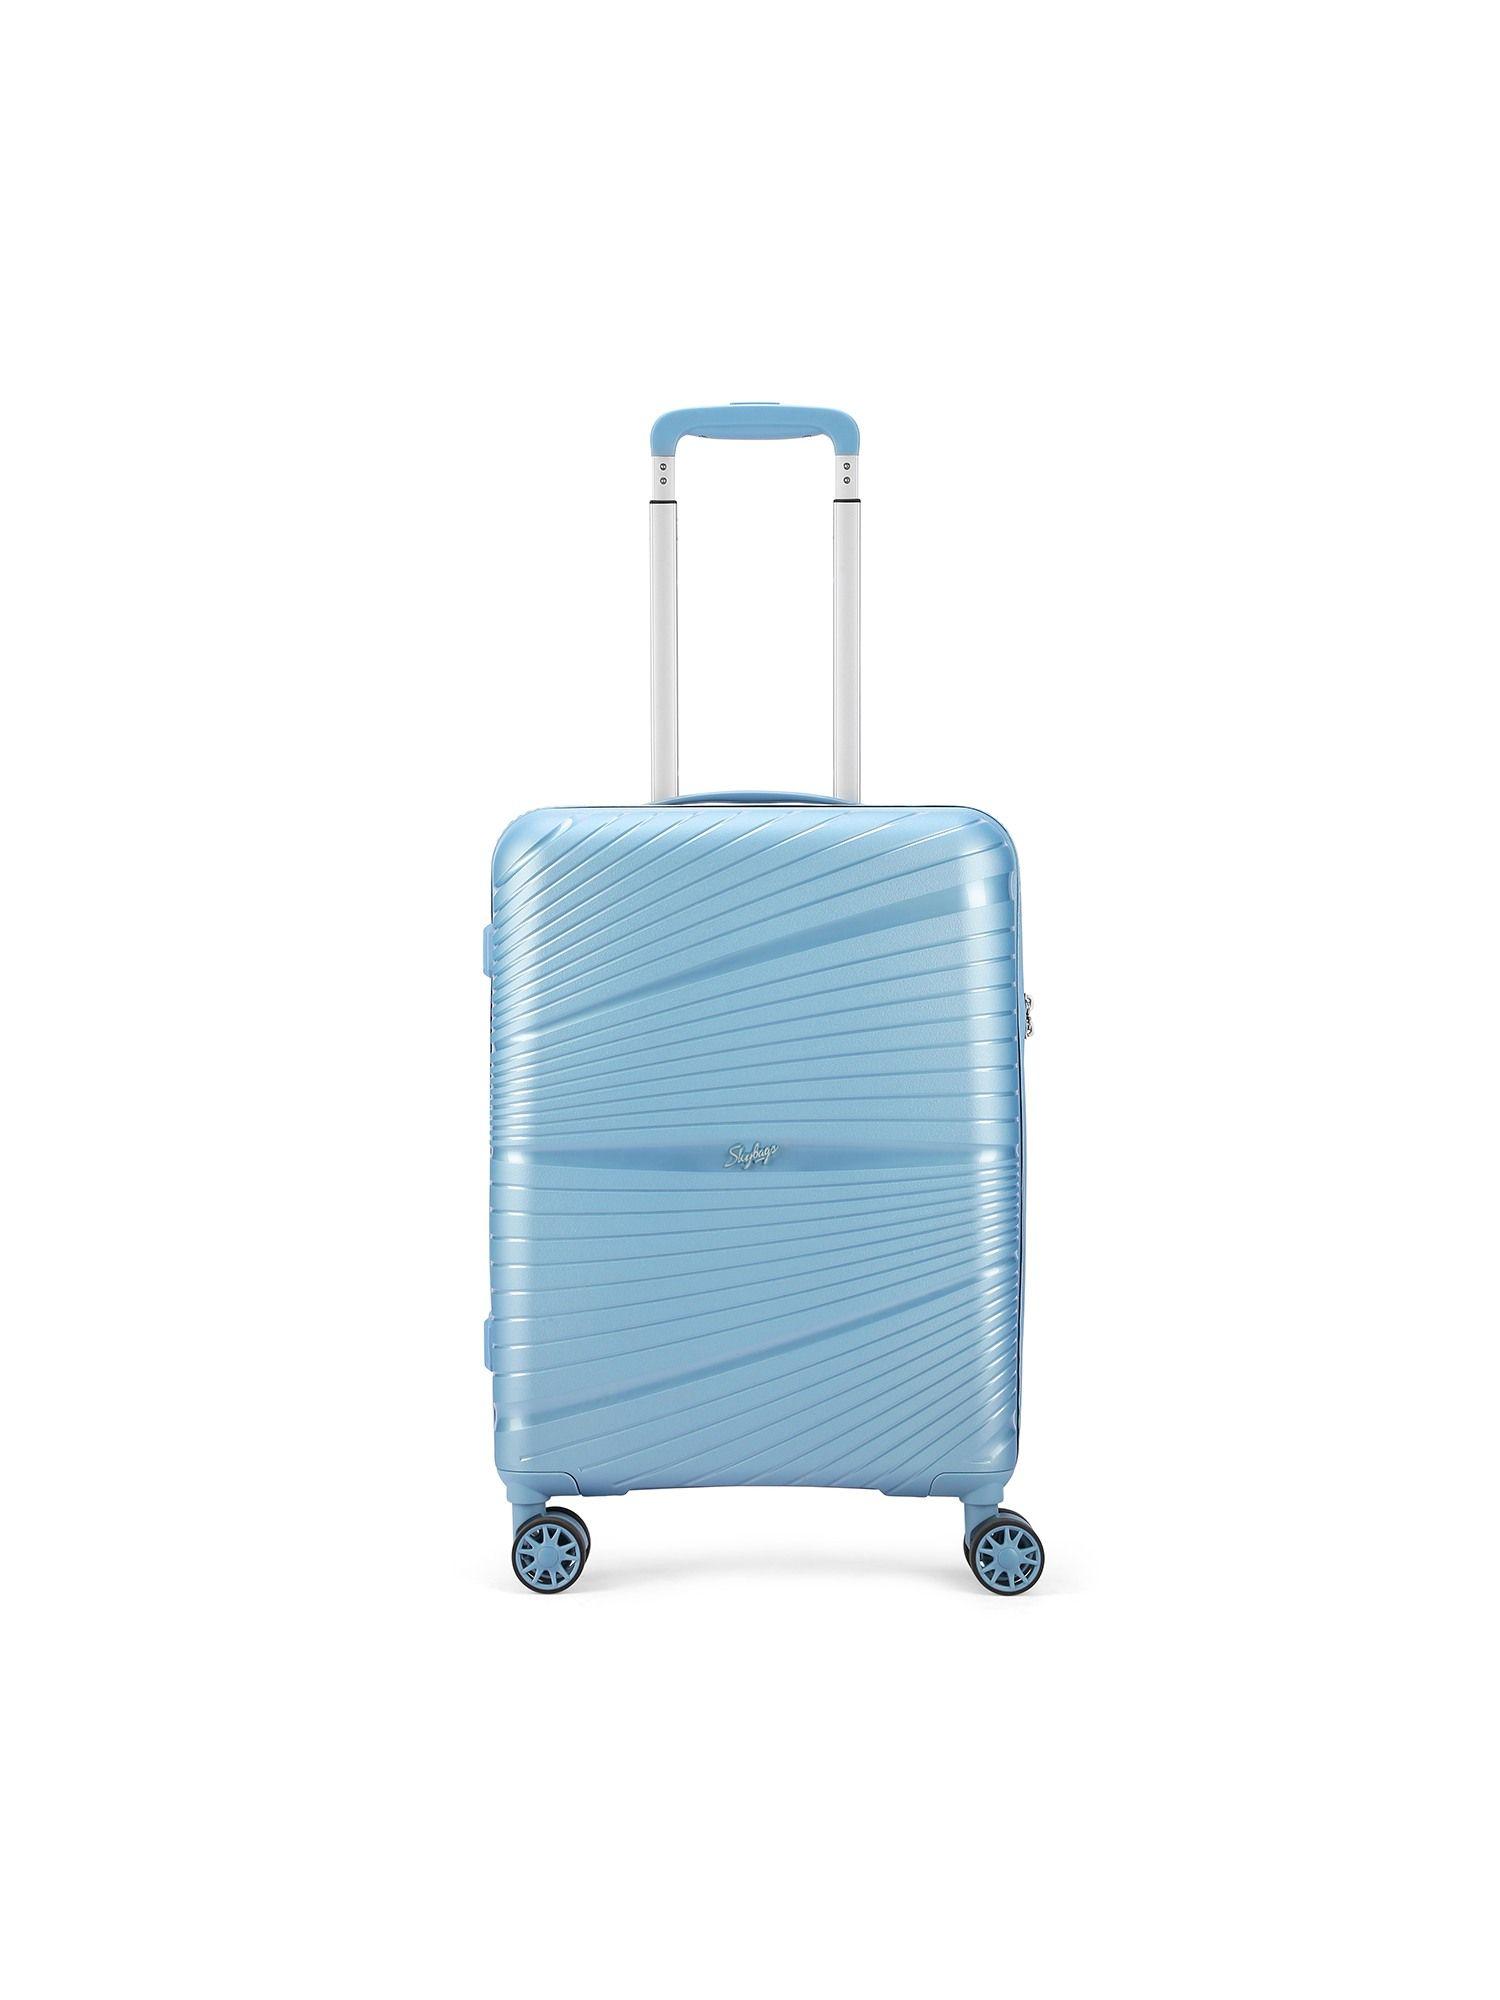 skylite light blue hard luggage 8-wheel suitcase cabin trolley bags